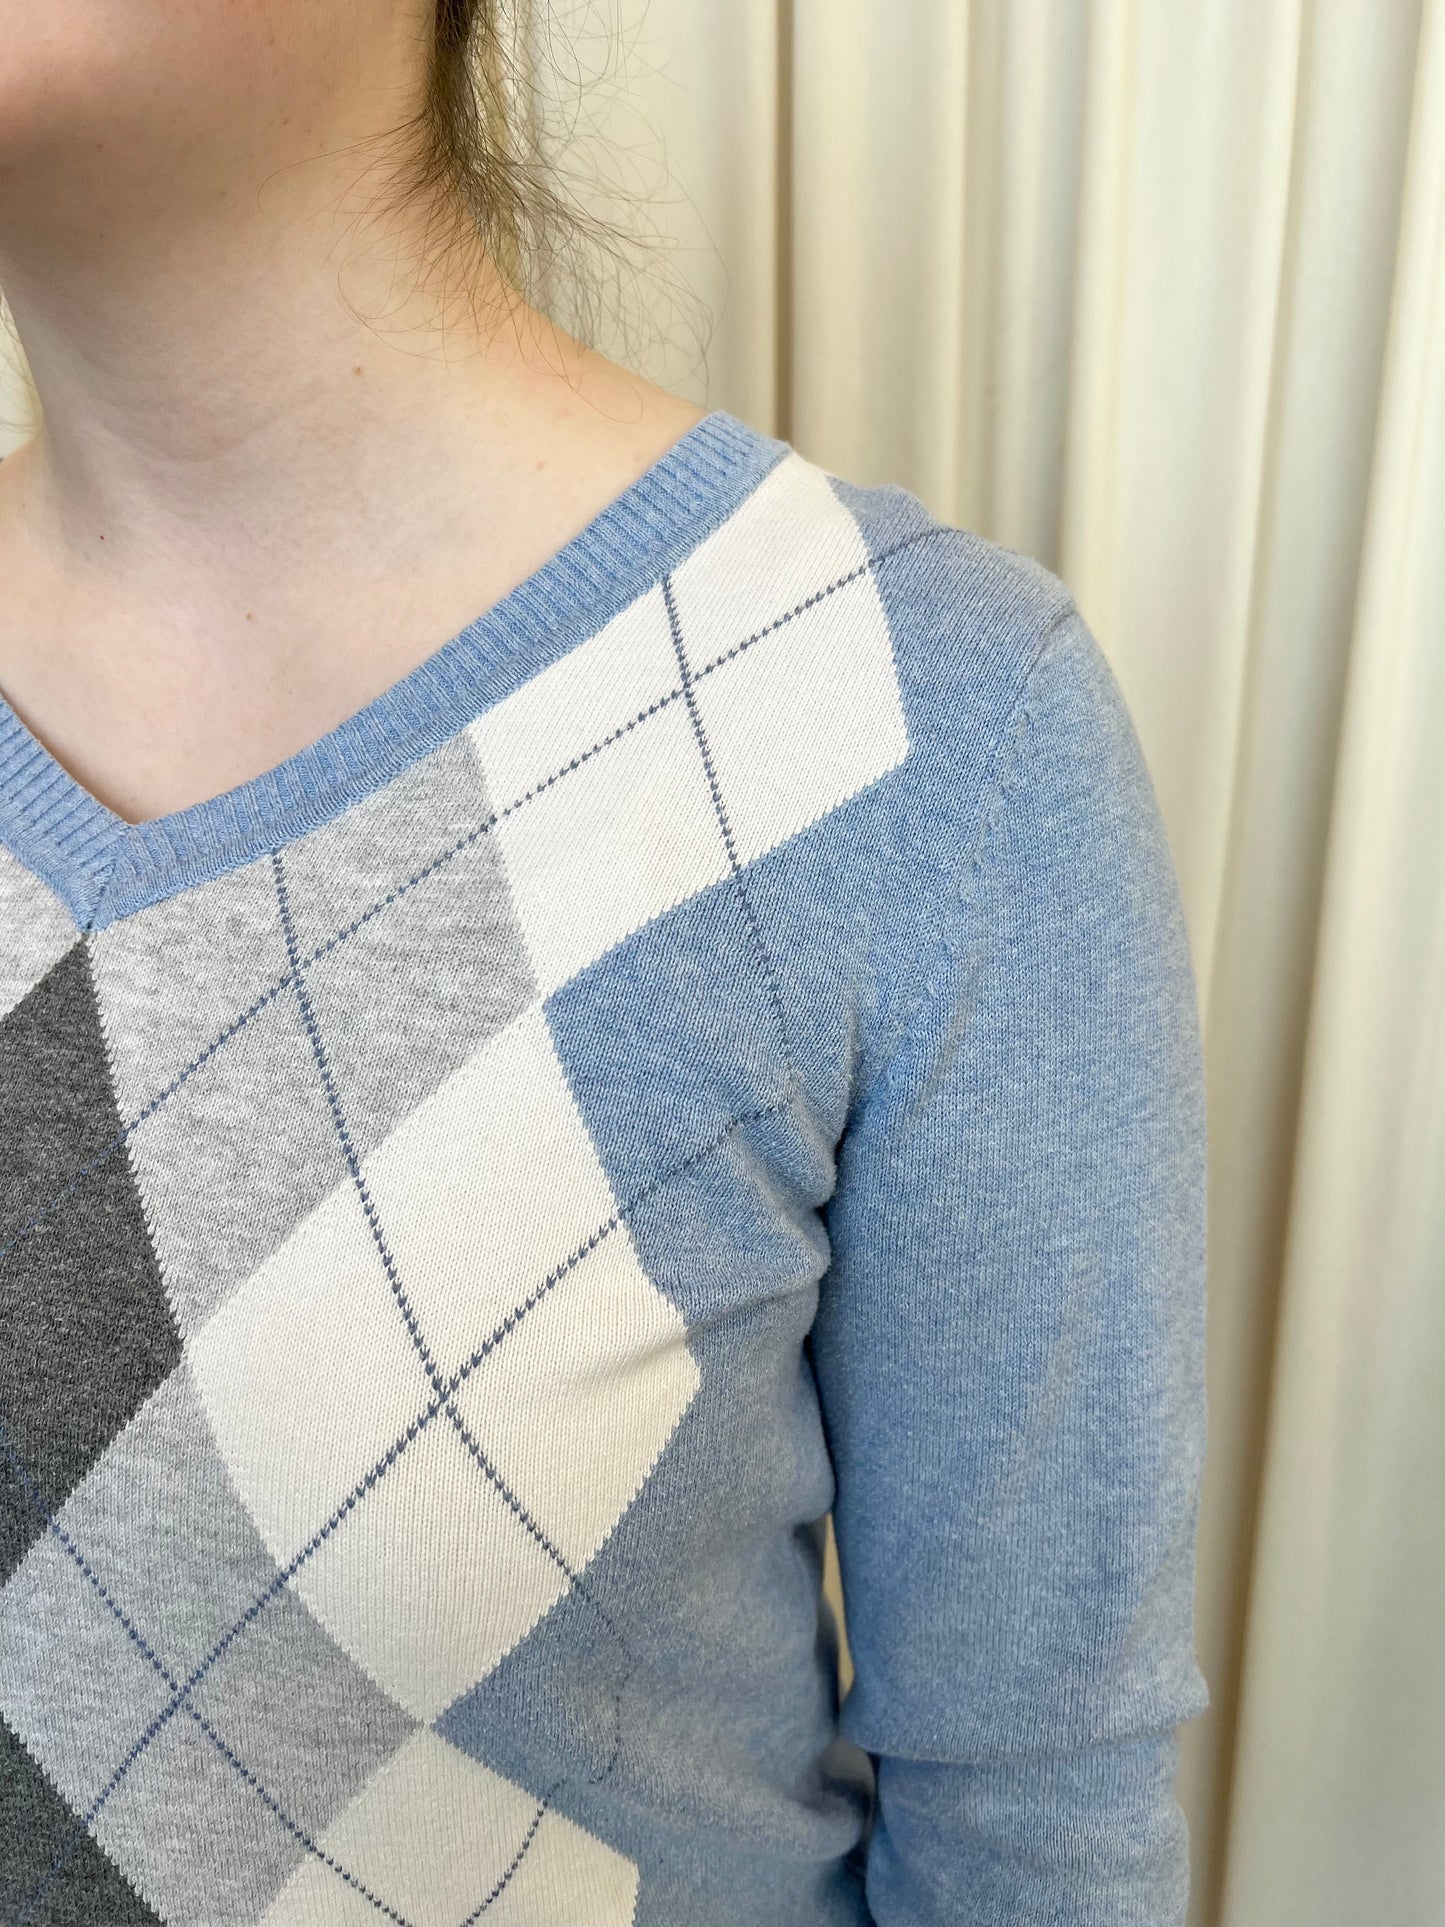 Light Blue Argyle Sweater - Medium